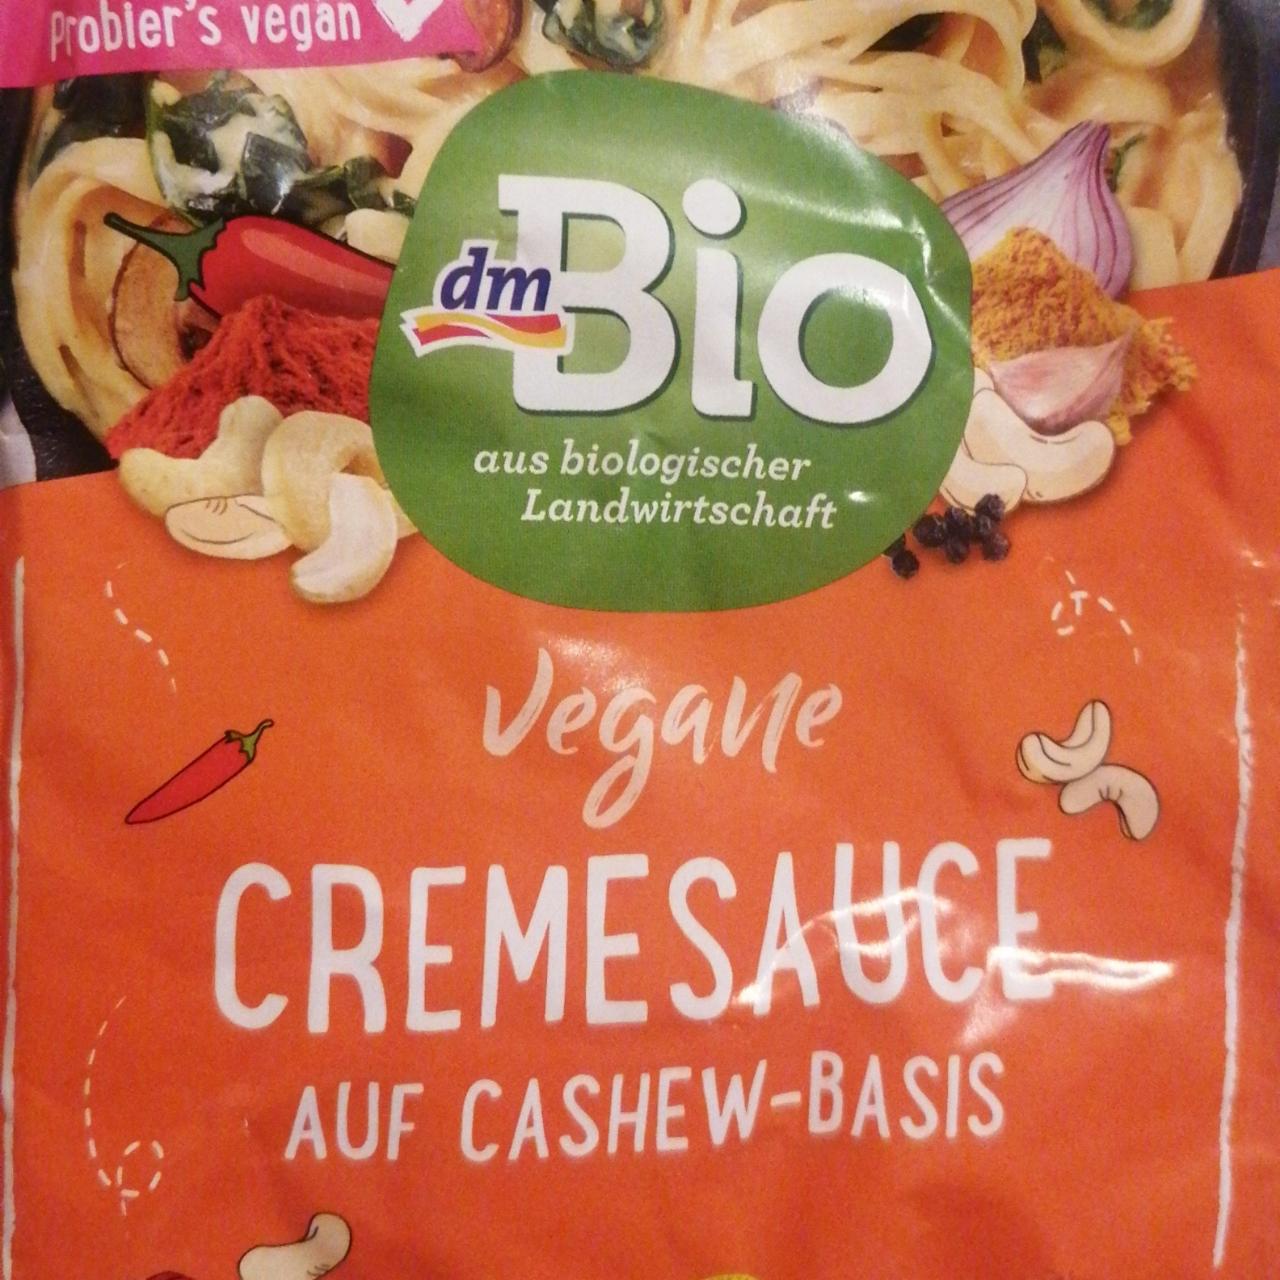 Fotografie - Vegane cremesauce auf cashew basis dmBio